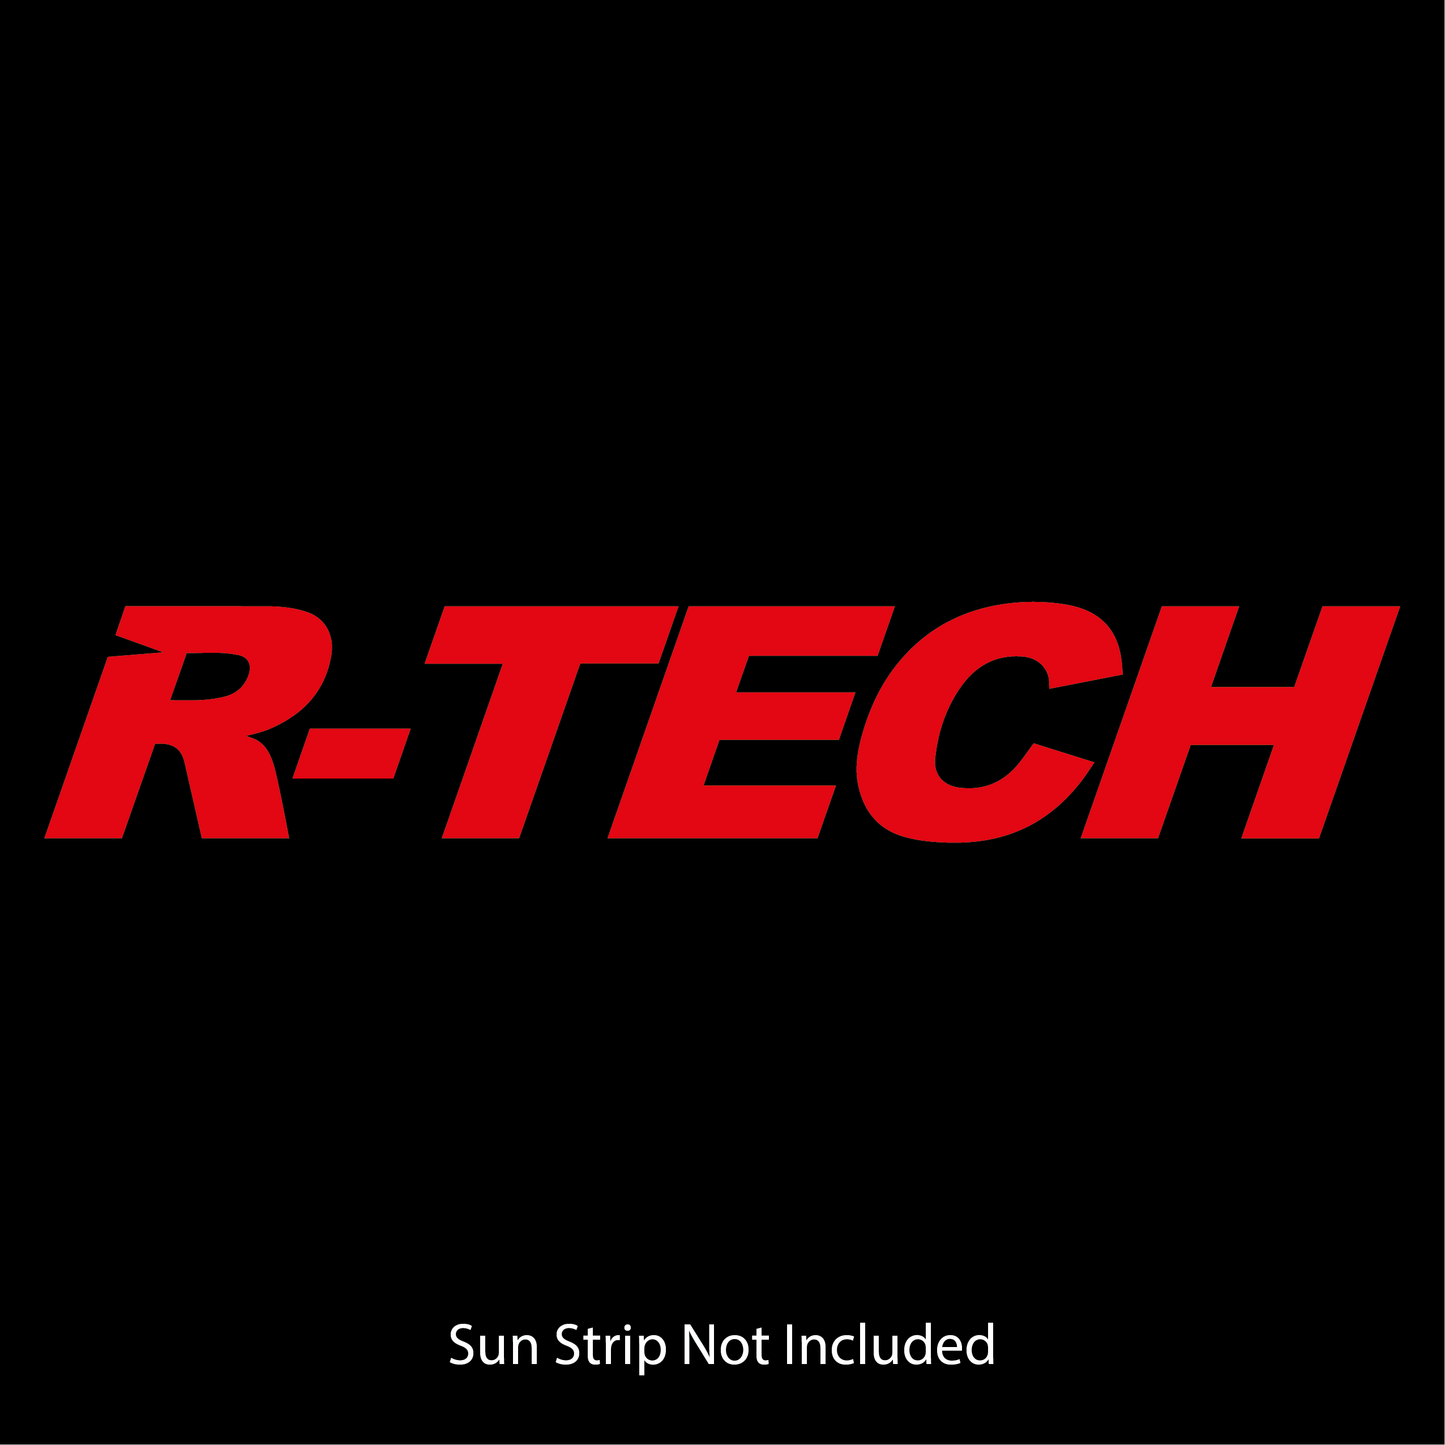 R-Tech Sun Strip Text